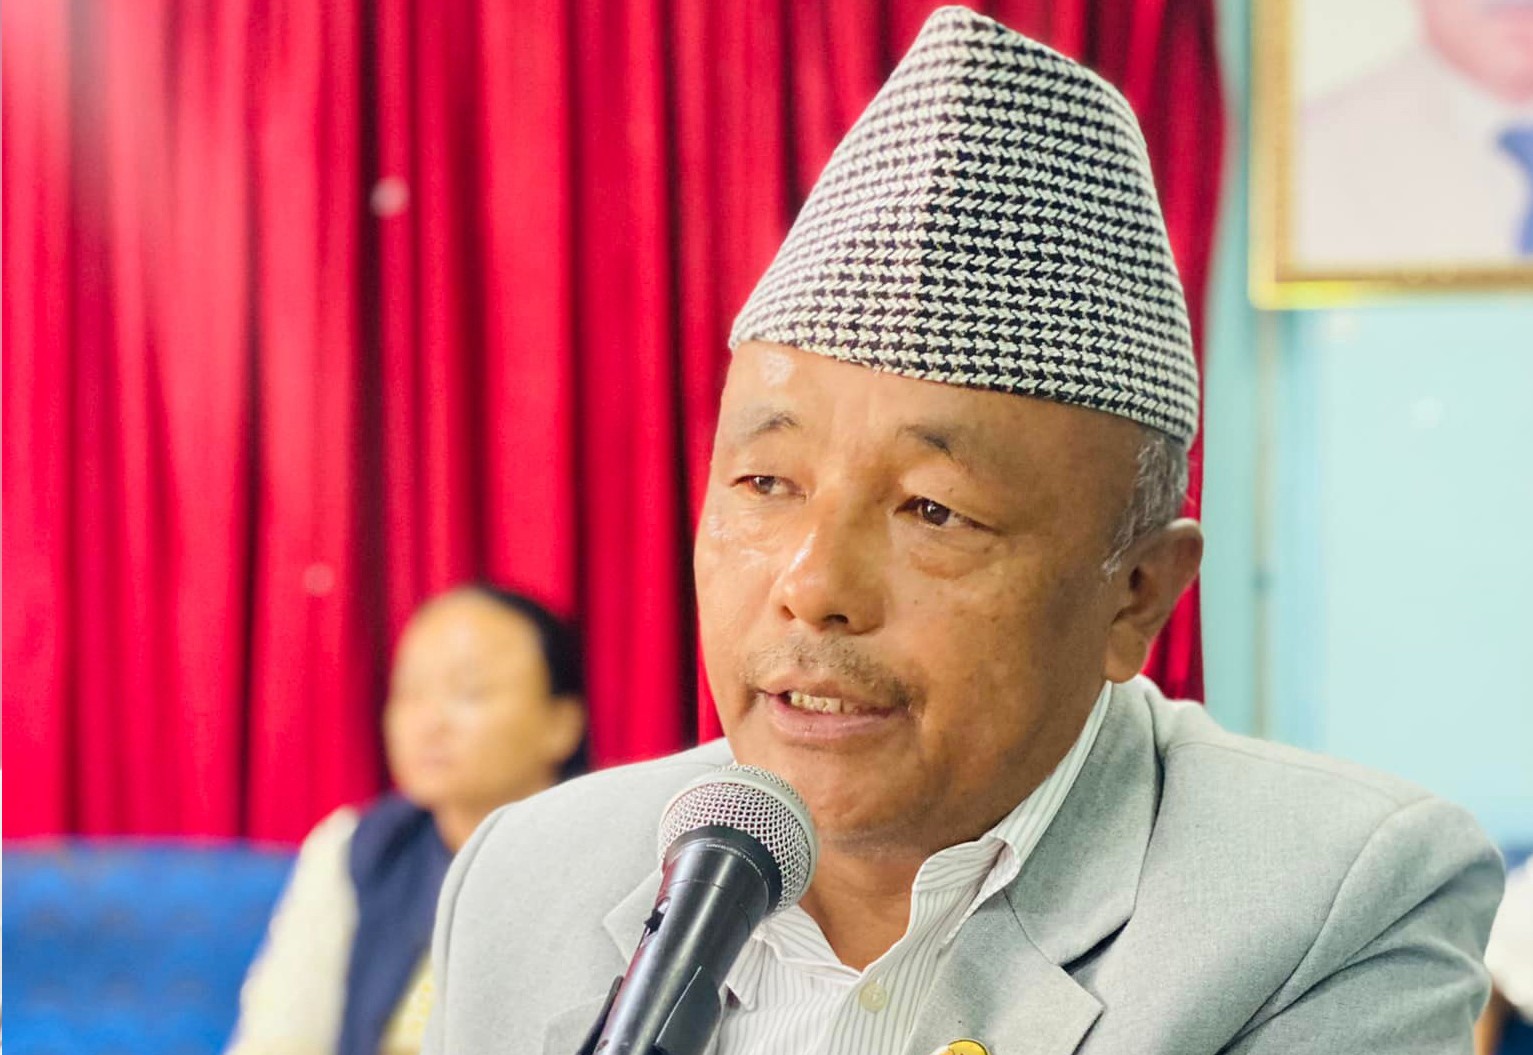 Law-making work of parliamentarians overshadowed: MP Tamang